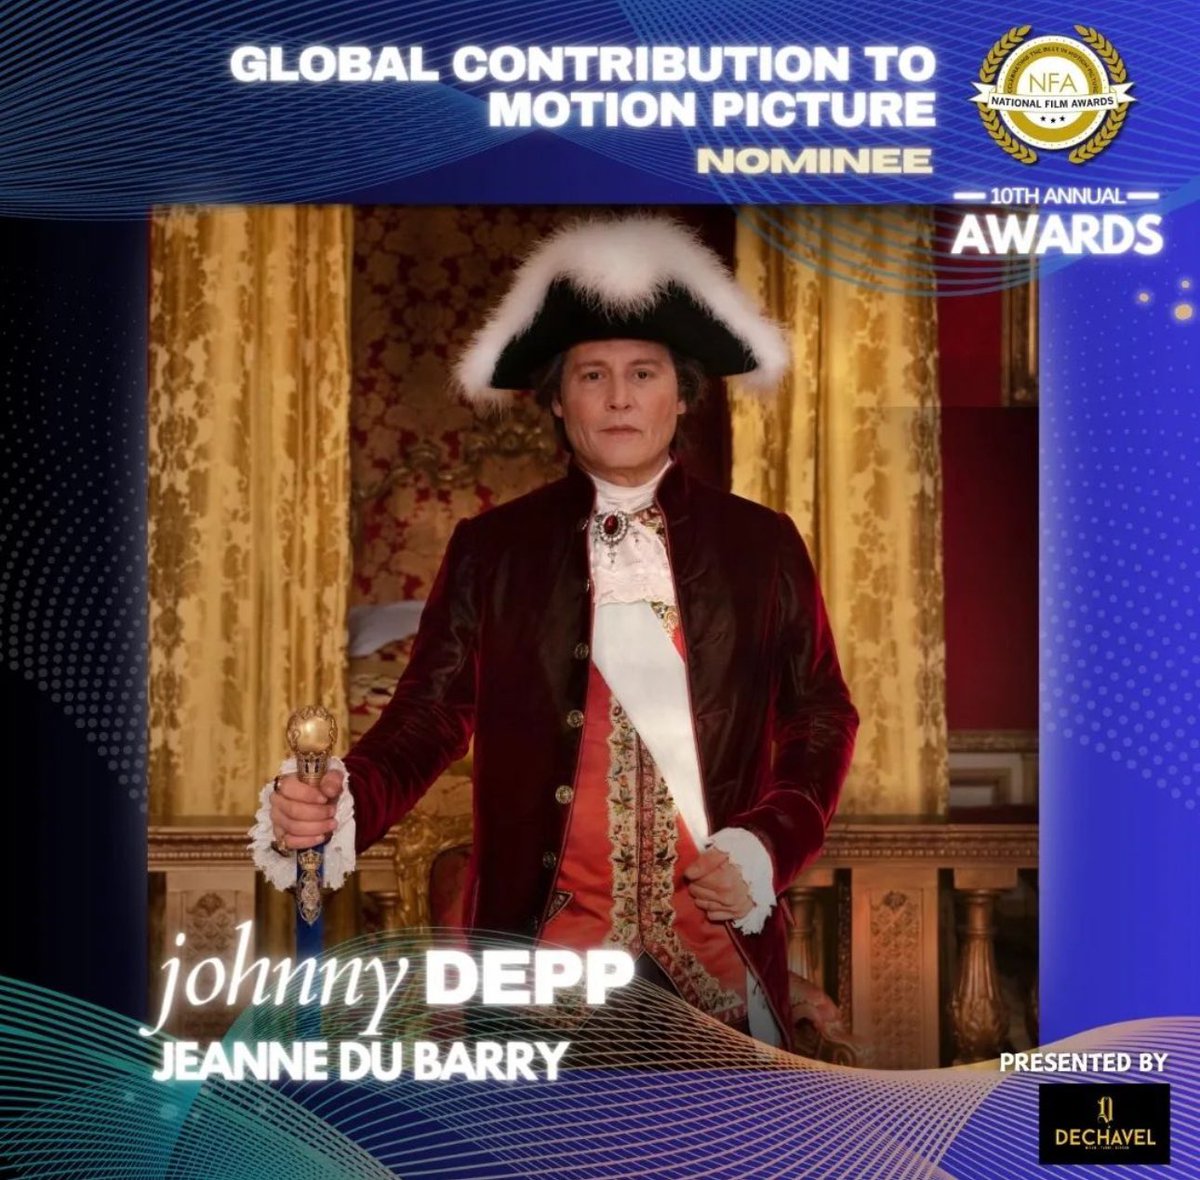 #JohnnyDepp nominated by the National Film Awards!! Go vote for Johnny at nationalfilmacademy.org  @in2_film  #JohnnyDeppKeepsWinning  #IStandWithJohnnyDepp #JohnnyDeppIsALegend #BestActor